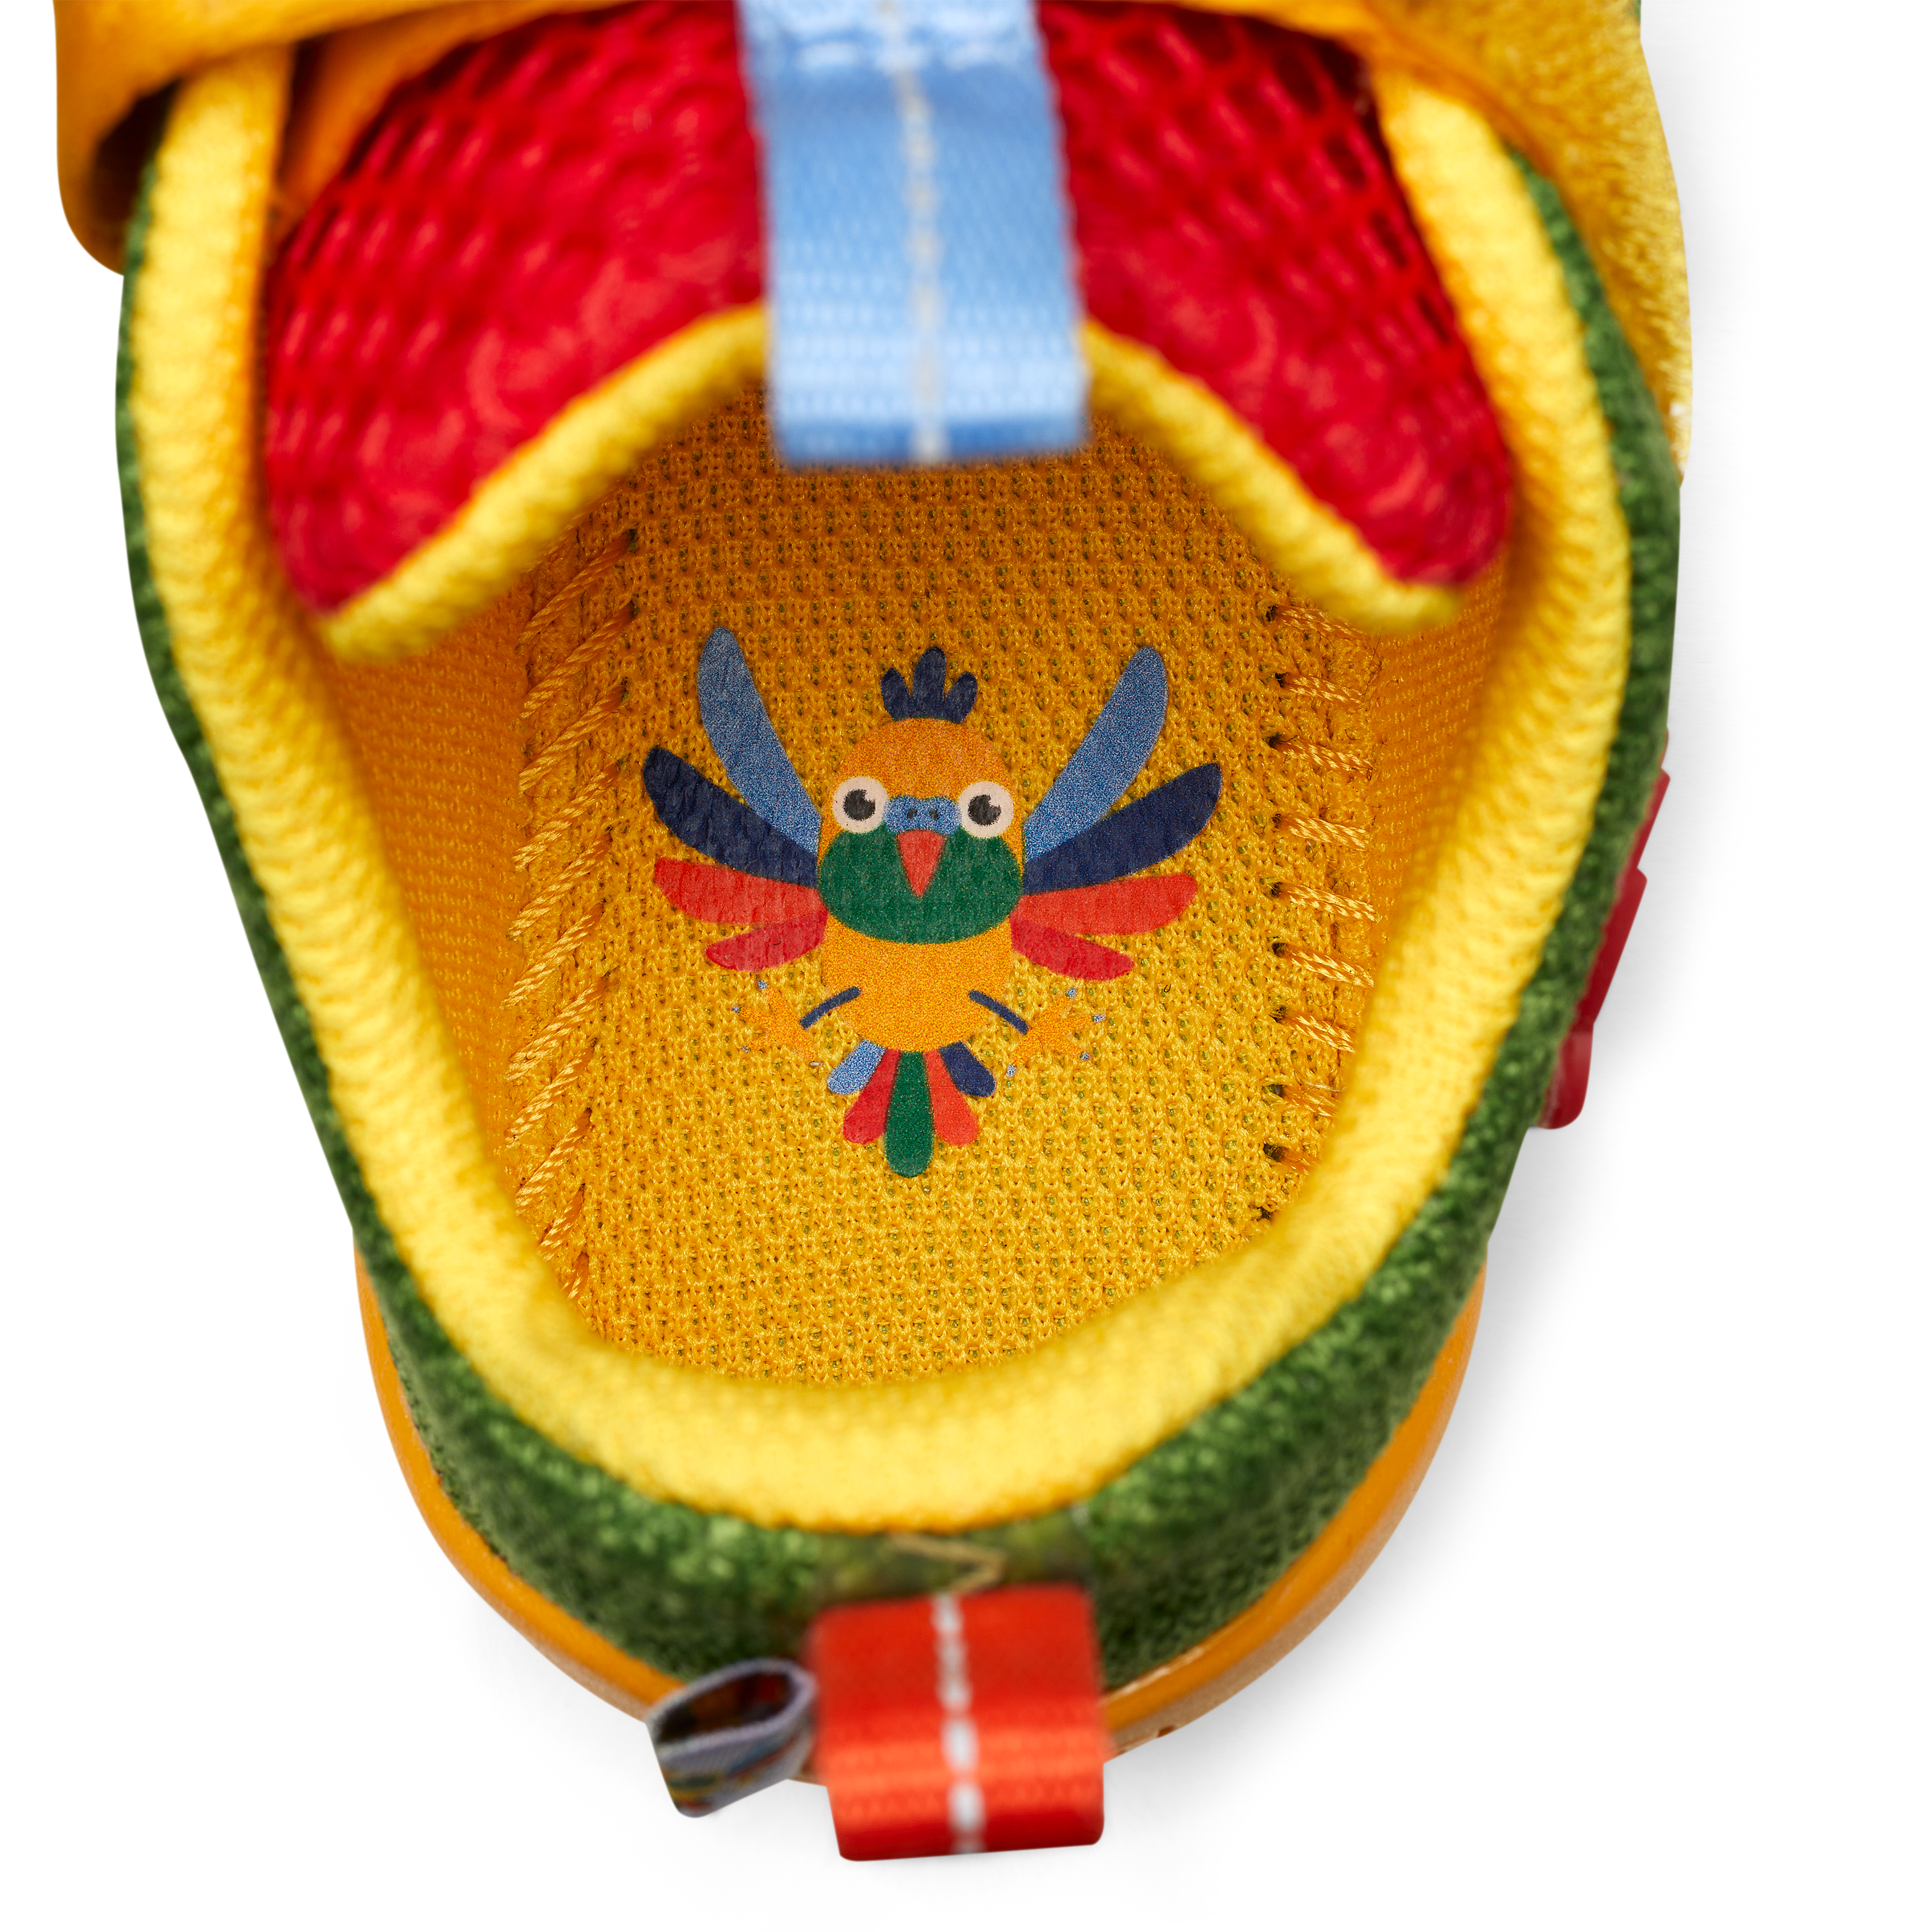 Affenzahn Knit Happy barfods sneakers til børn i farven bird of paradise, detalje